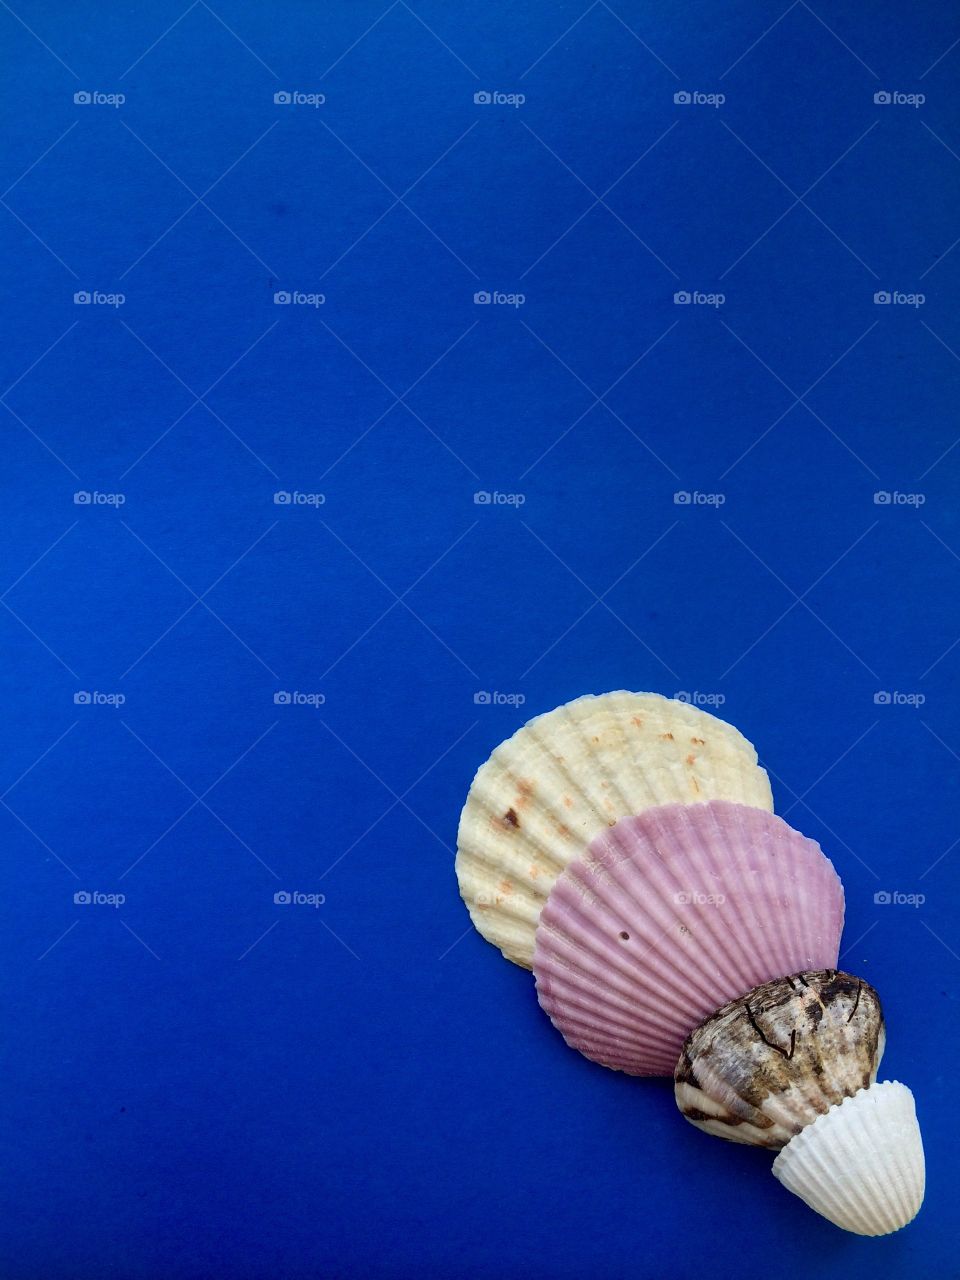 Studio shot of seashells on blue background